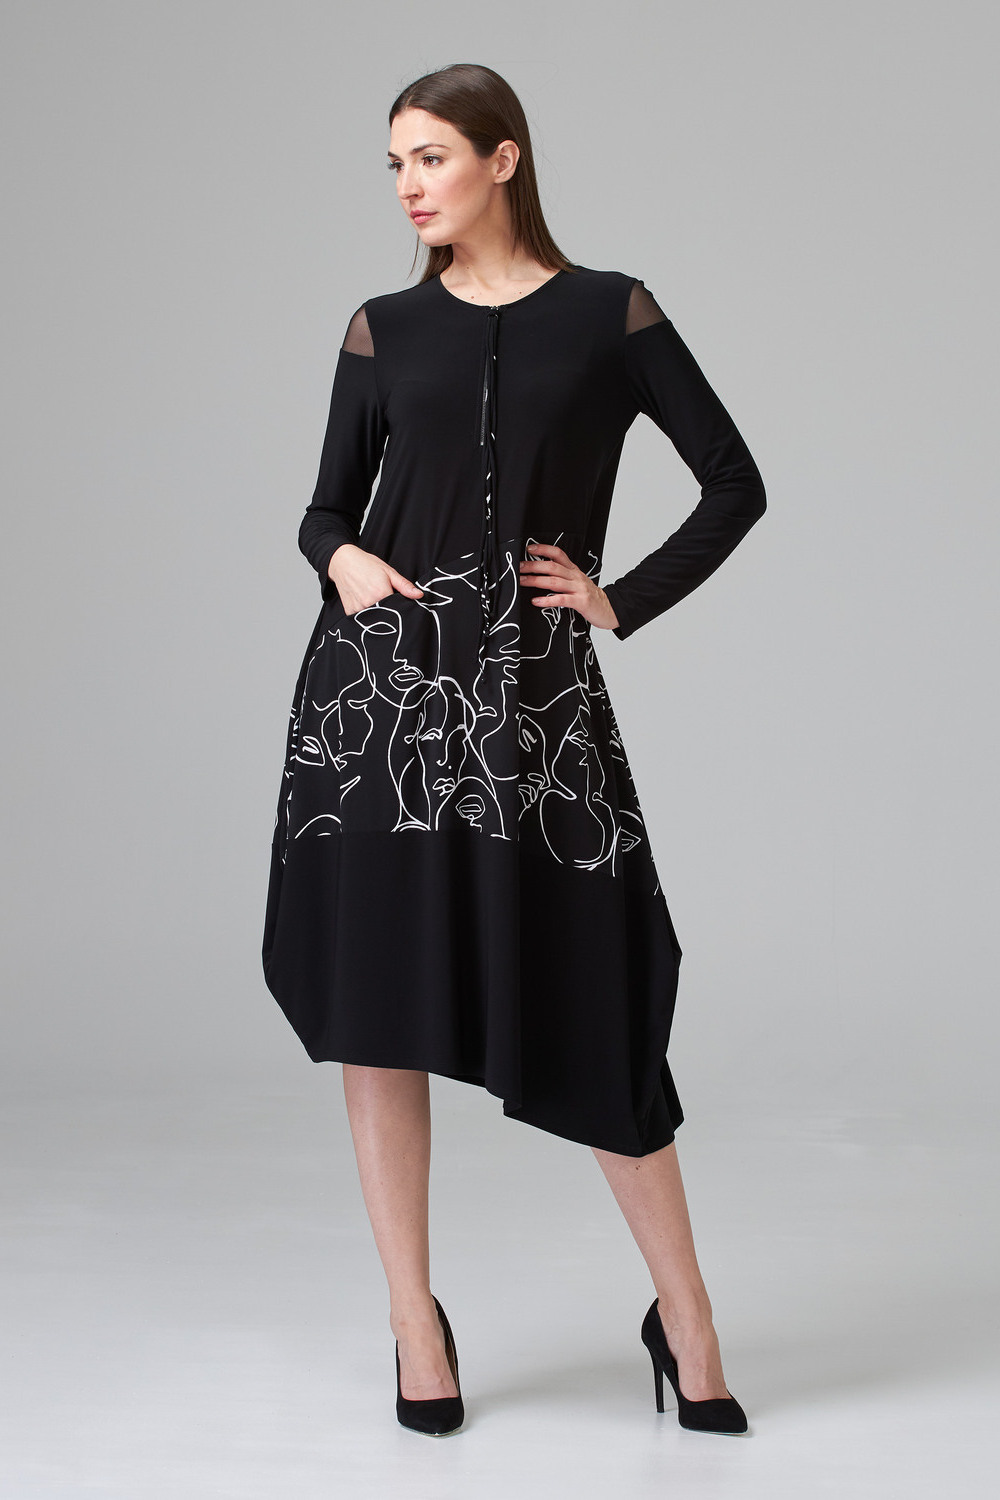 Joseph Ribkoff Dress Style 201285. Black/vanilla